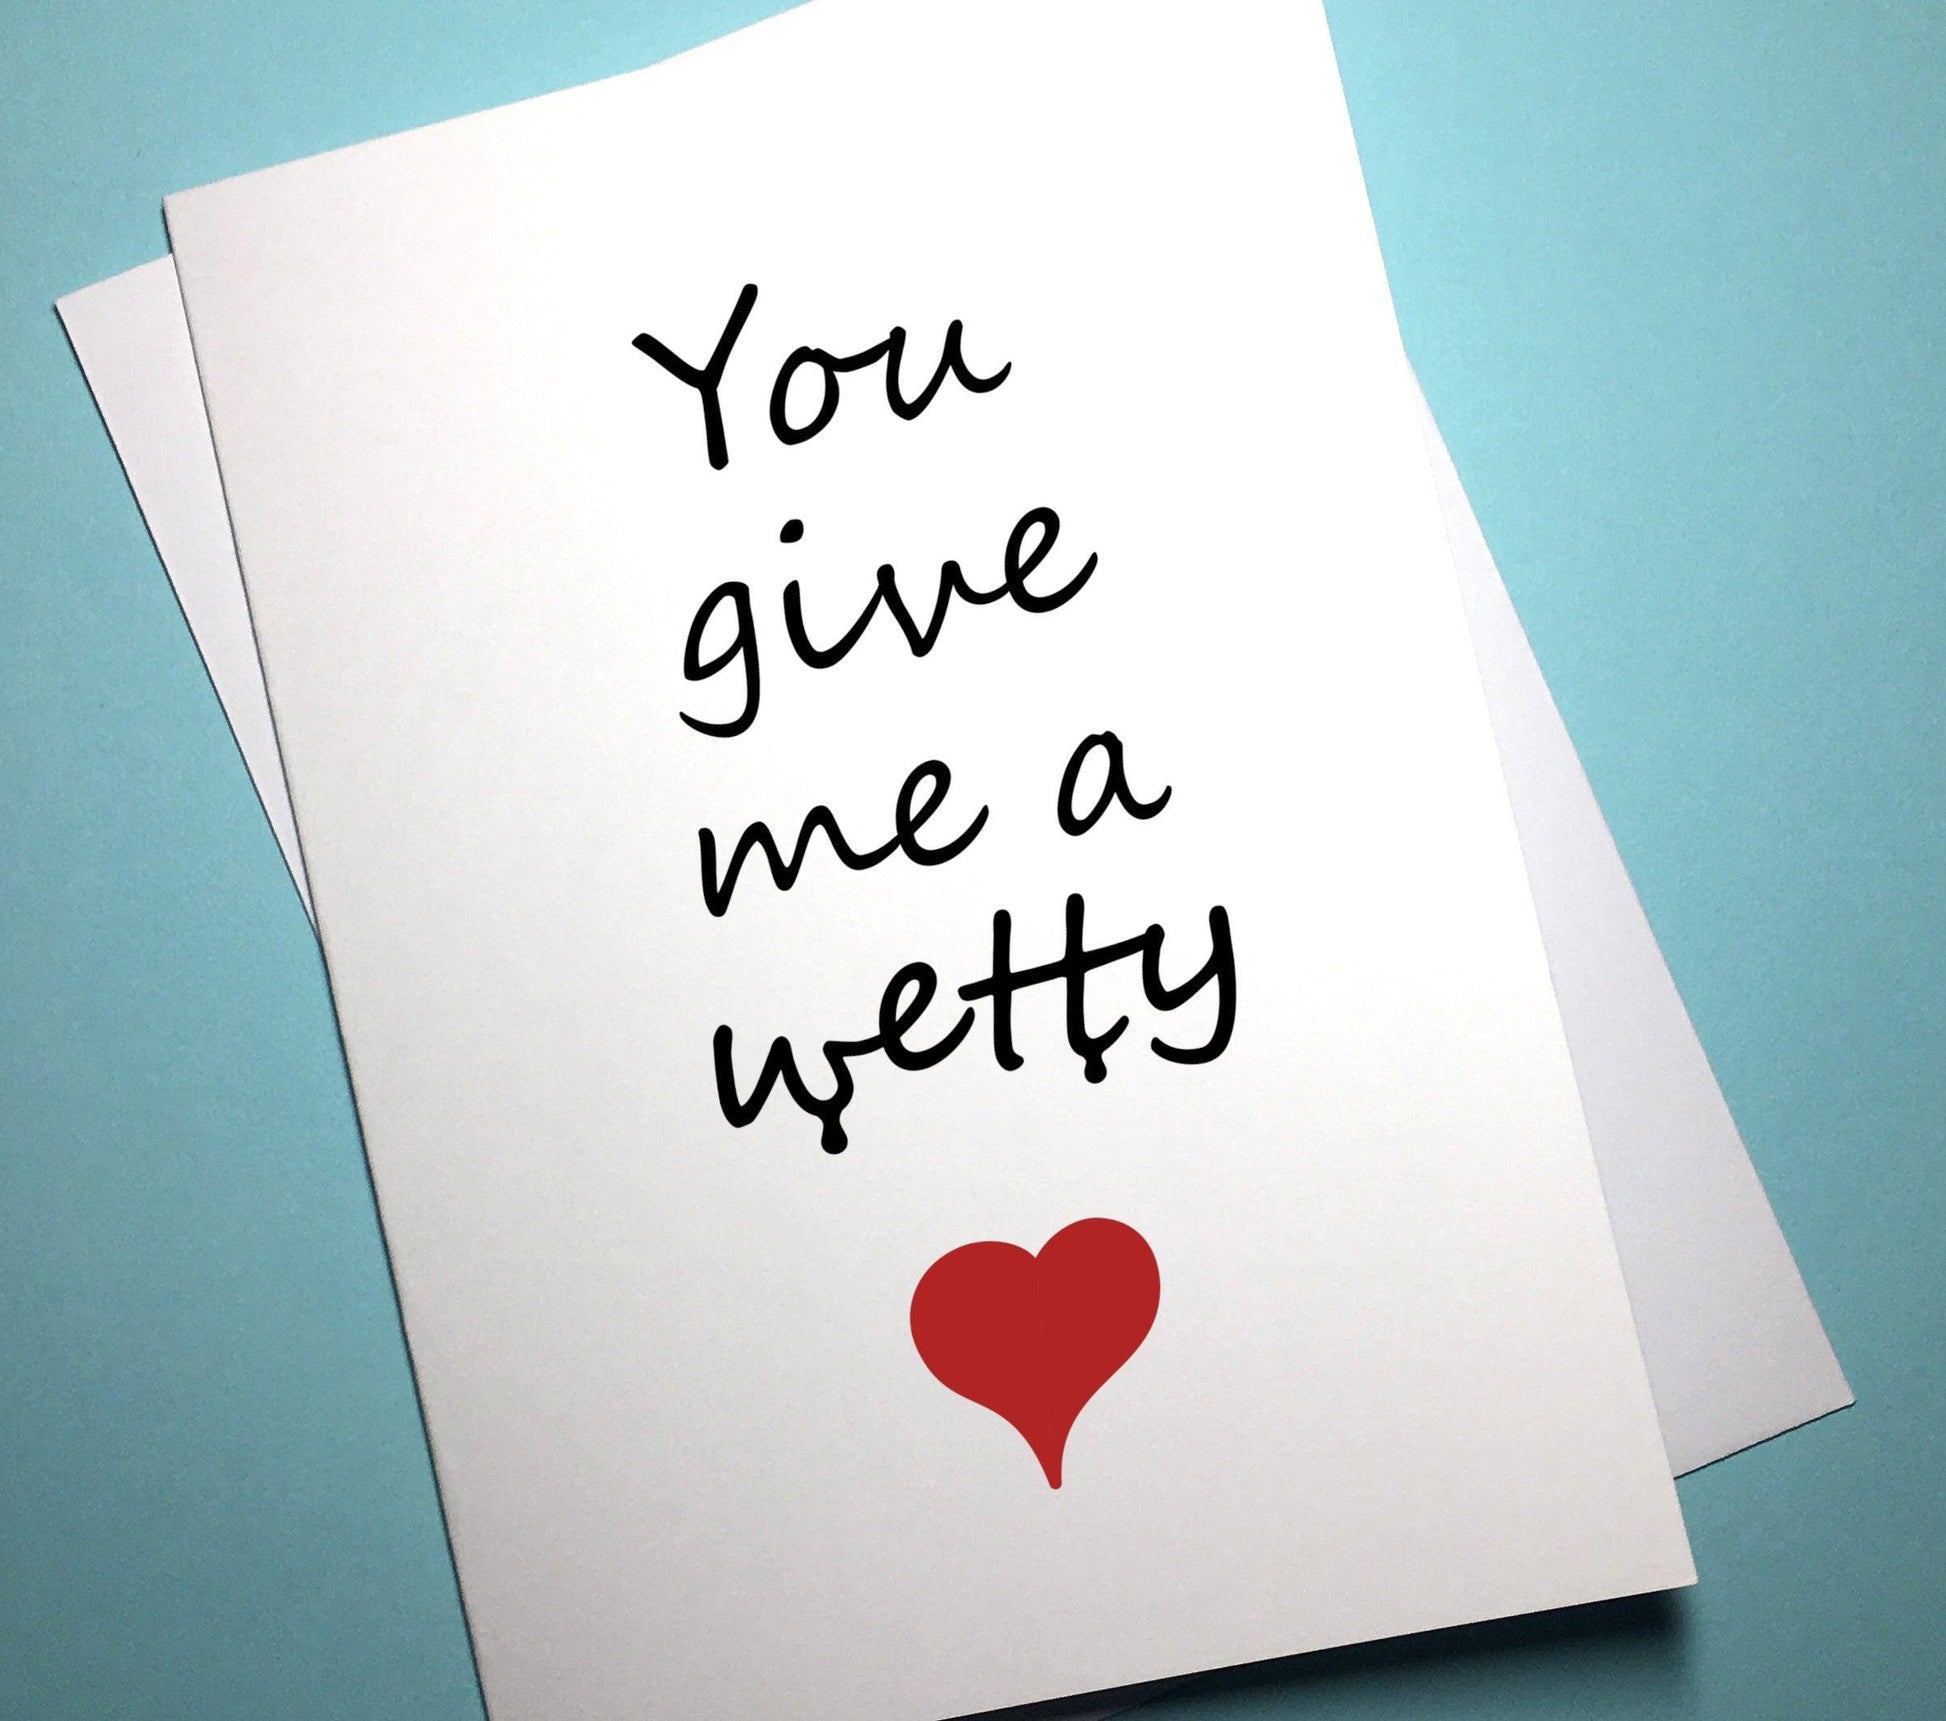 Valentine's Anniversary Card - Wetty - Mr. Inappropriate 